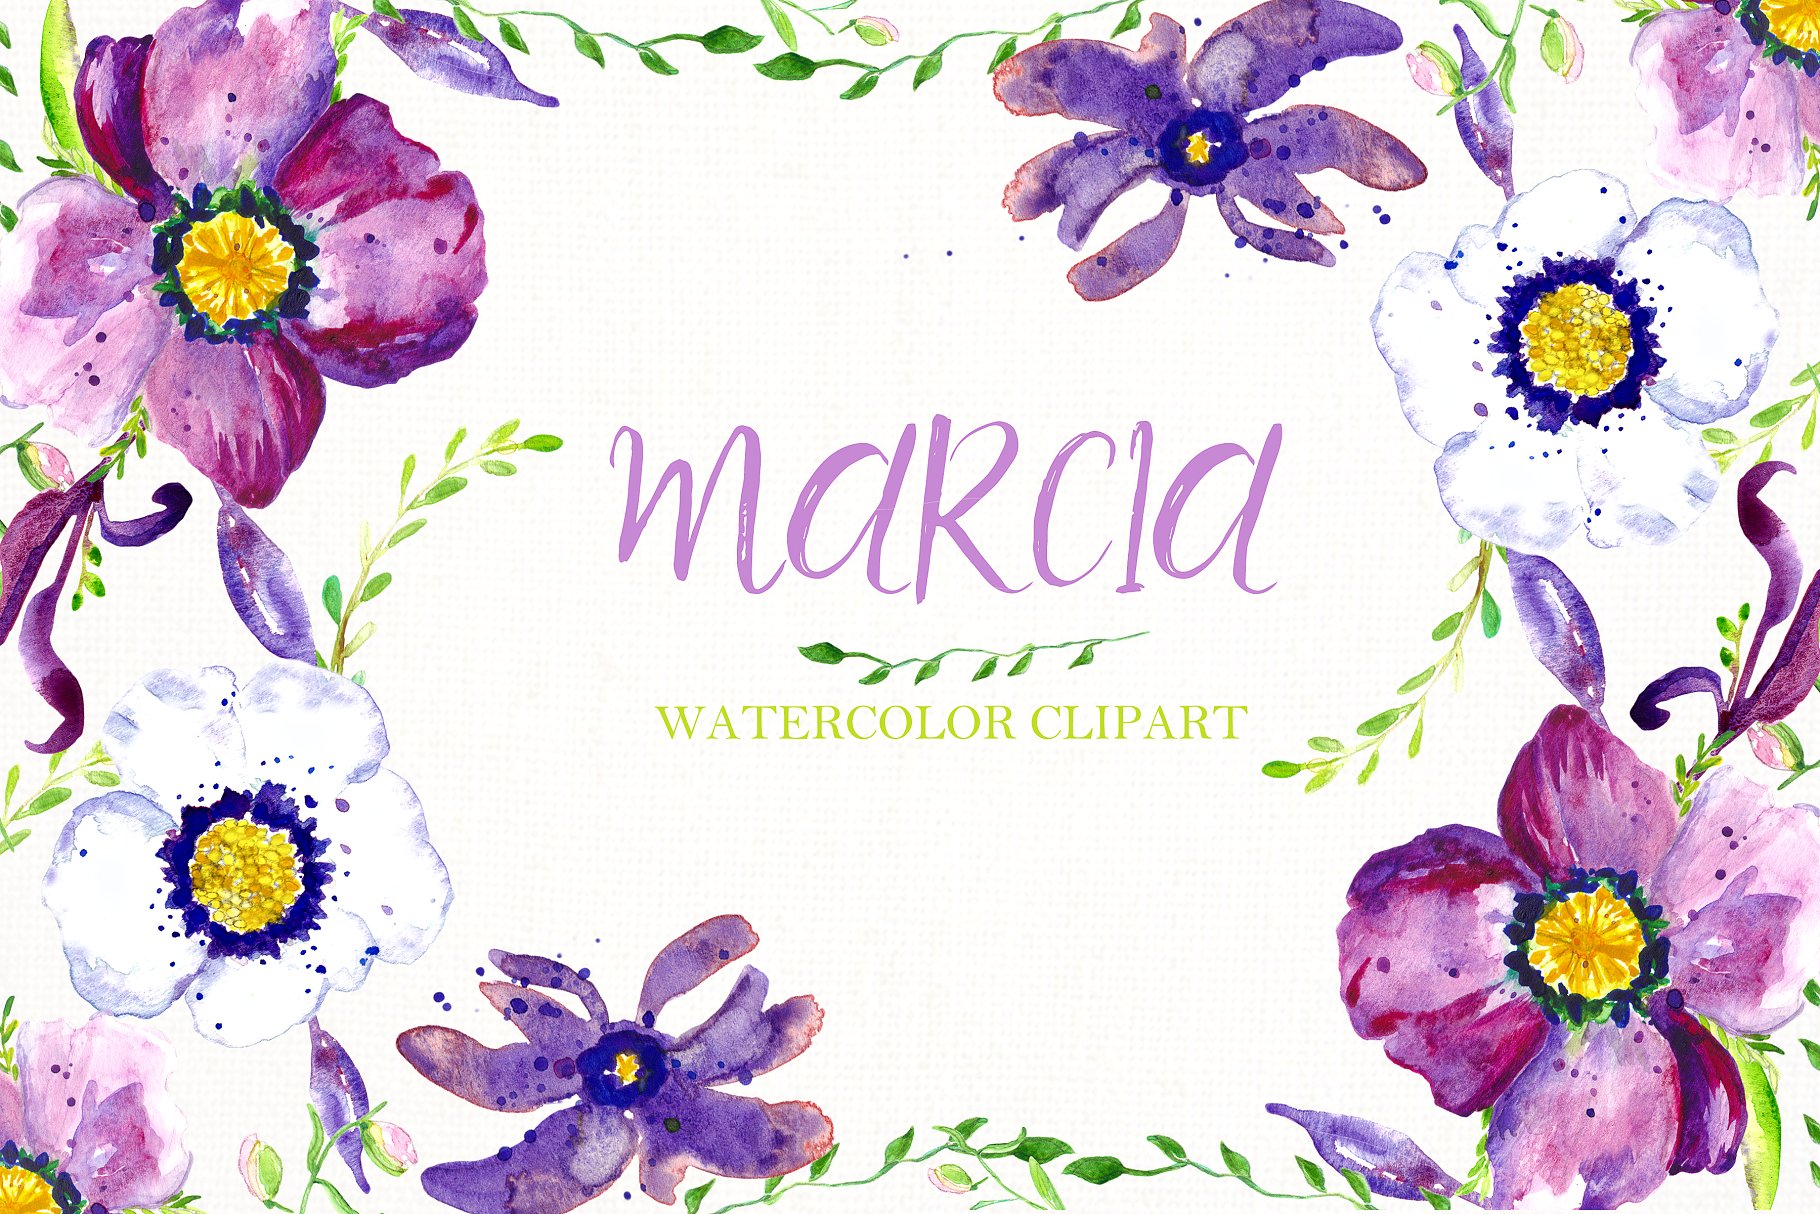 紫色手绘水彩海葵花卉剪贴画 Watercolor clipart Anemone flowers.插图(3)